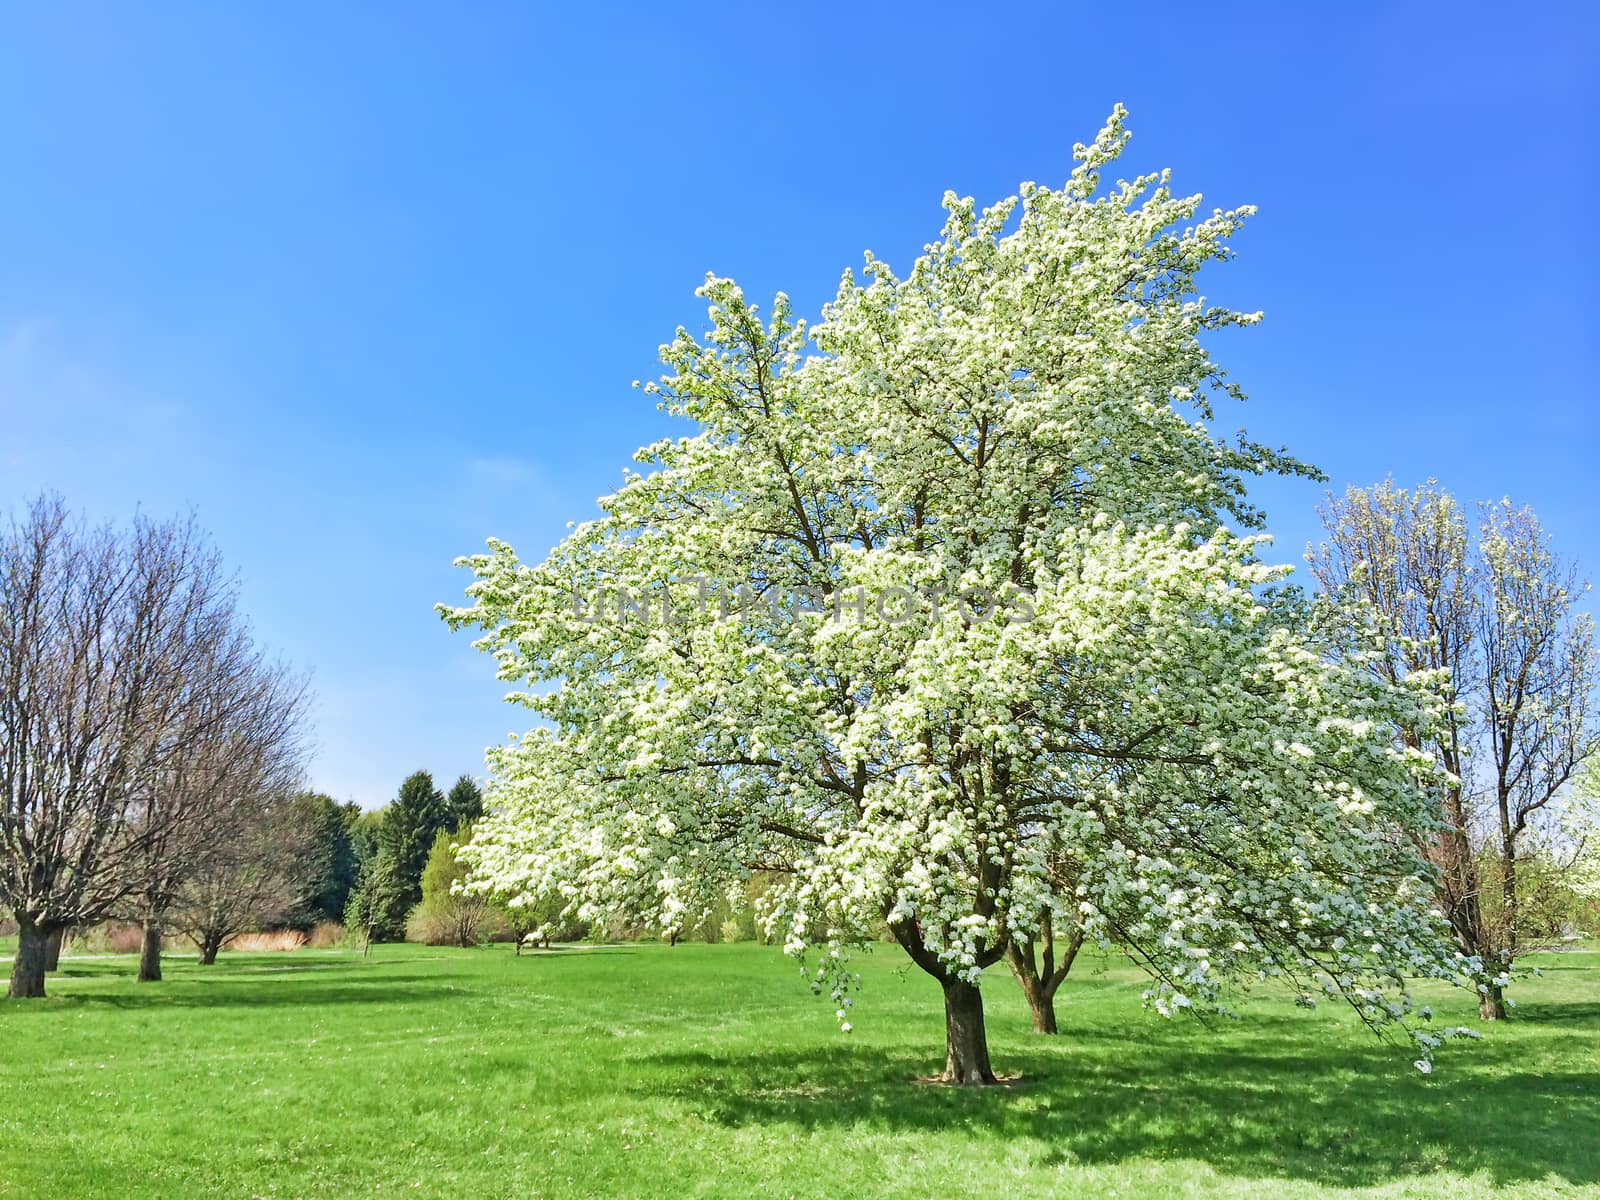 White blooming tree in spring garden by anikasalsera